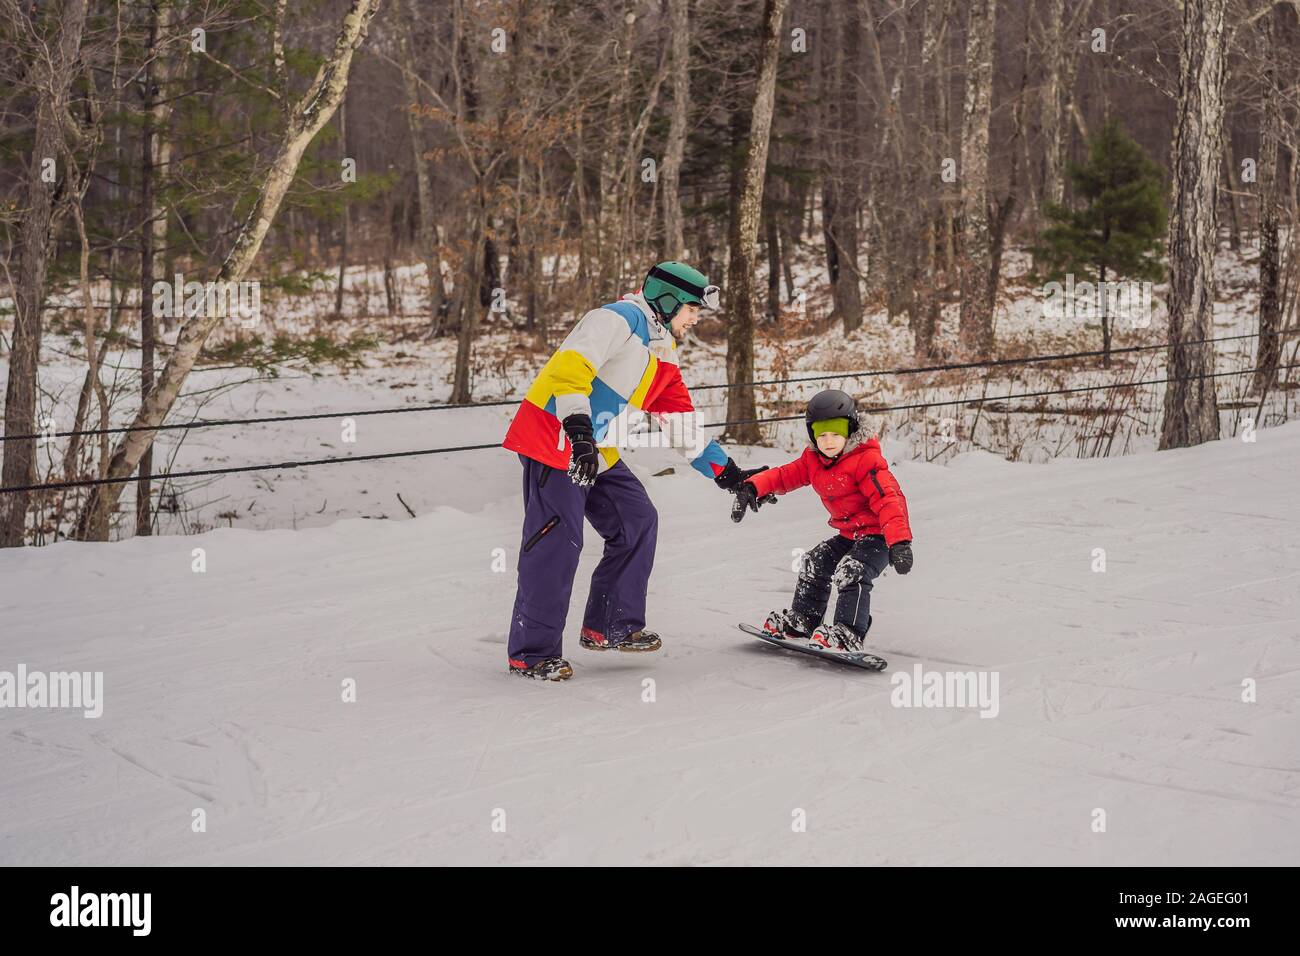 Snowboard instructor teaches a boy to snowboarding. Activities for children in winter. Children's winter sport. Lifestyle Stock Photo